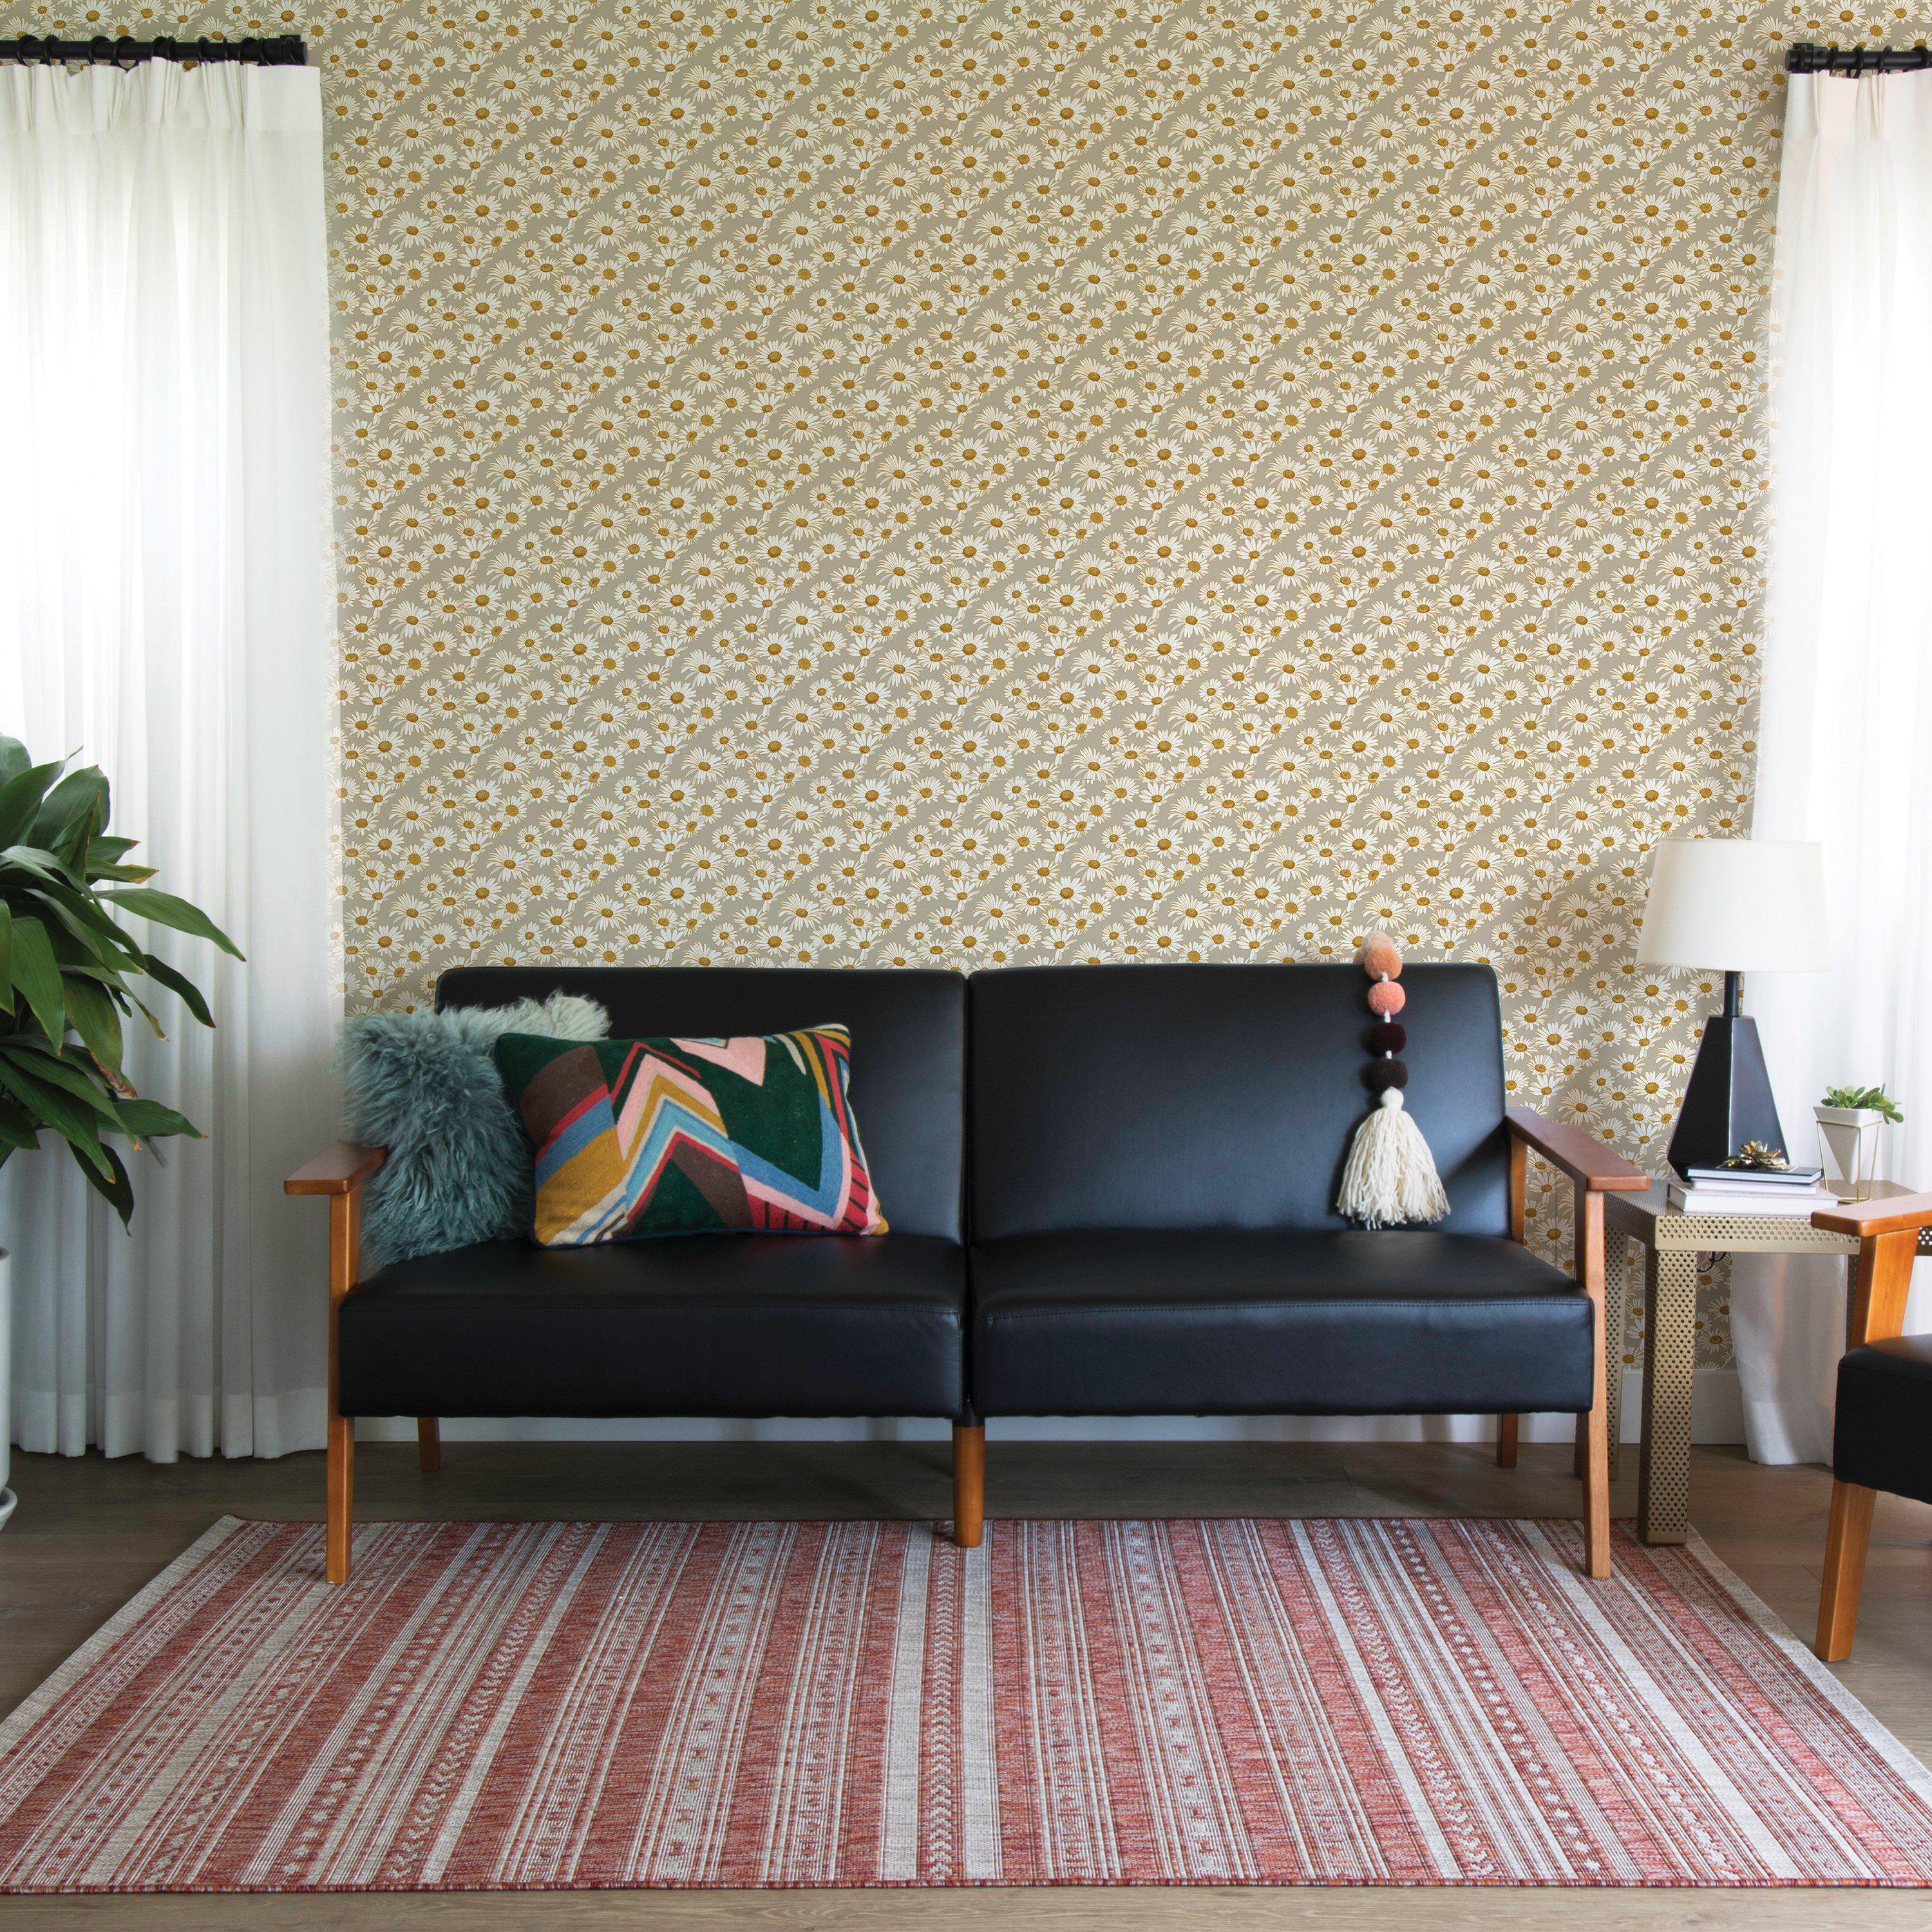 Tempaper Designs LIFESTYLE - Novogratz Daisies Greige Peel and Stick Wallpaper